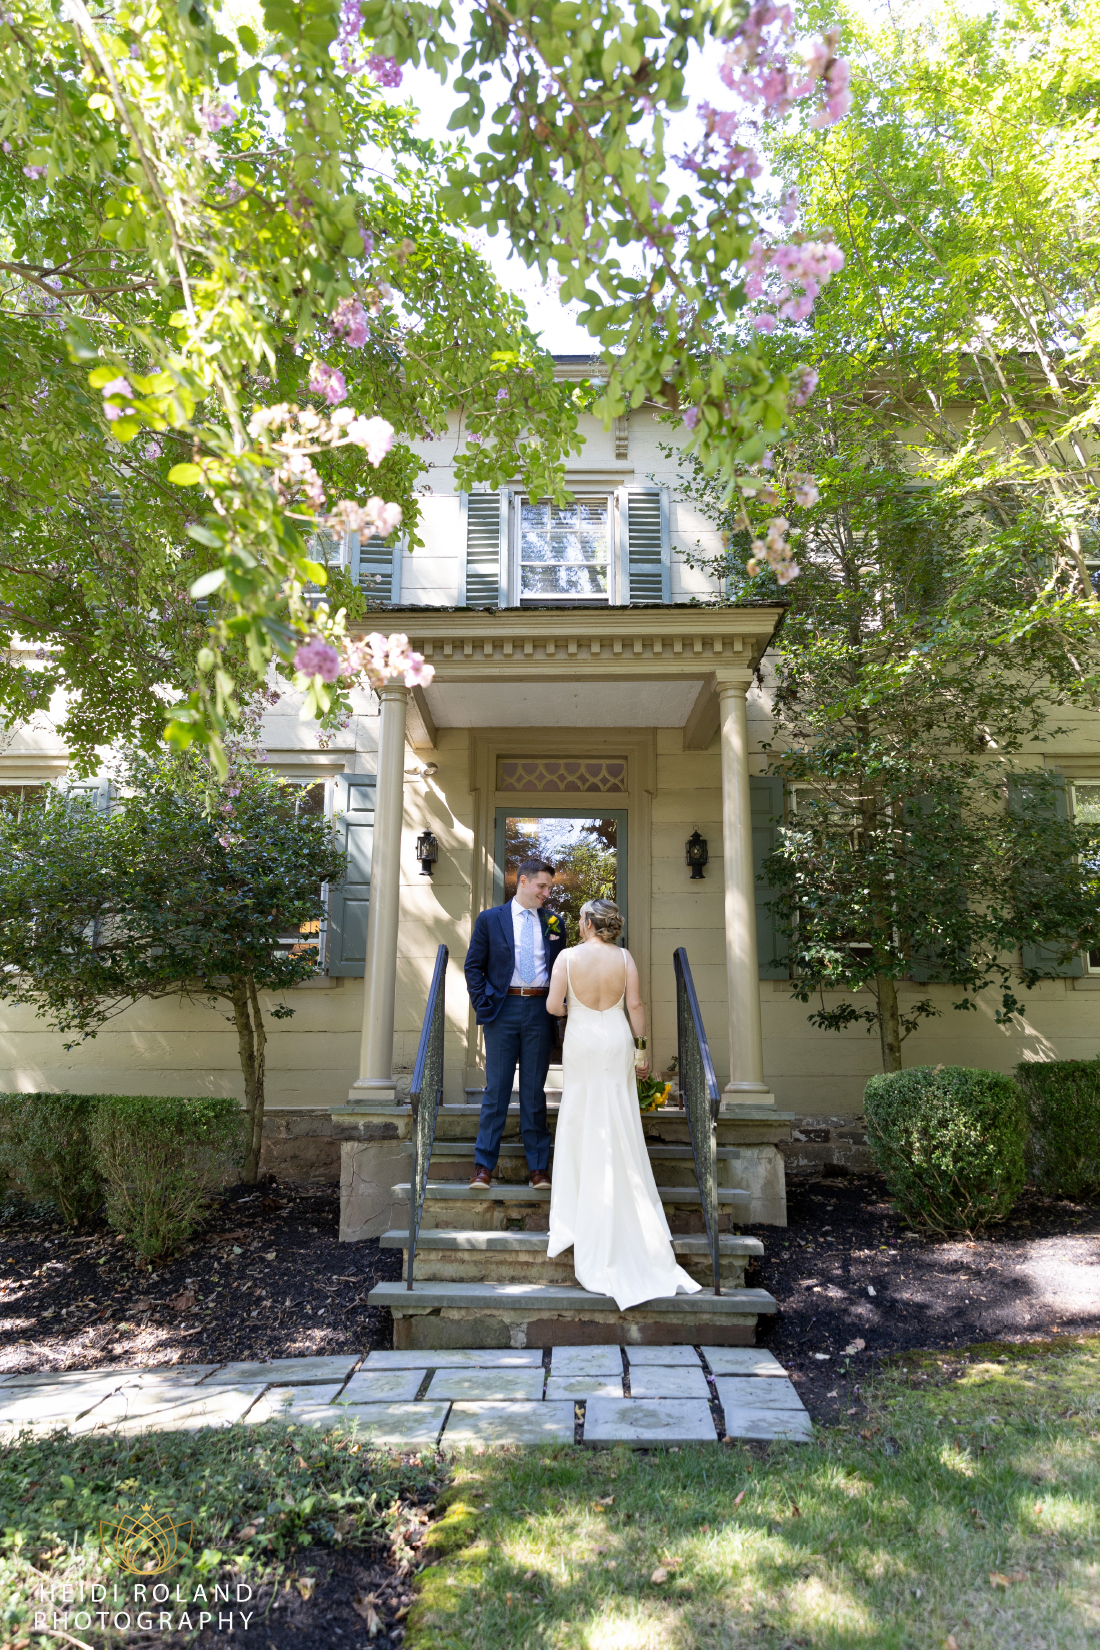 Wedding photos of bride and groom at The Inn at Glencairn Princeton NJ by Heidi Roland Photography